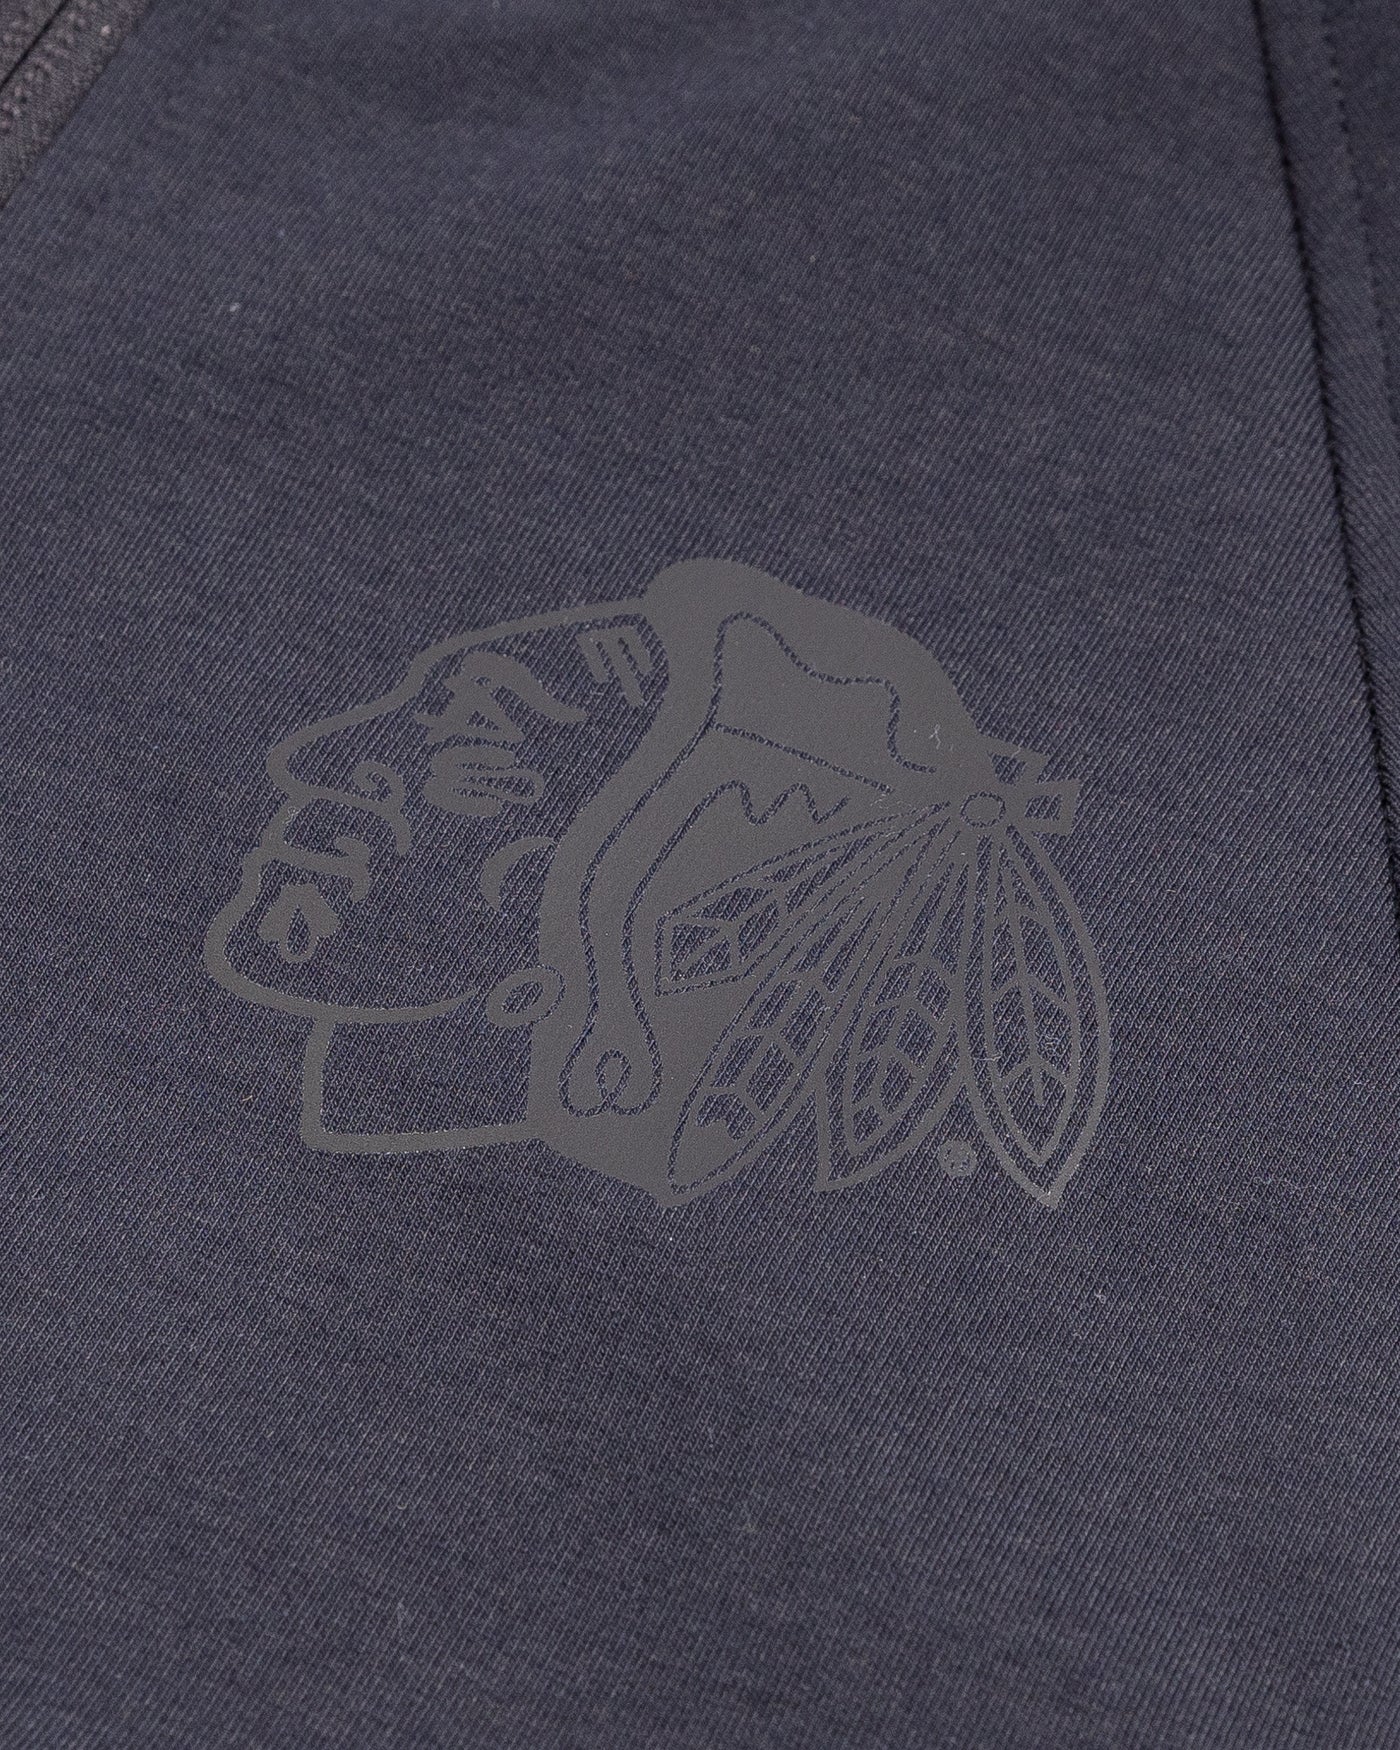 black lululemon full zip hoodie with tonal Chicago Blackhawks primary logo printed on left chest - detail lay flat